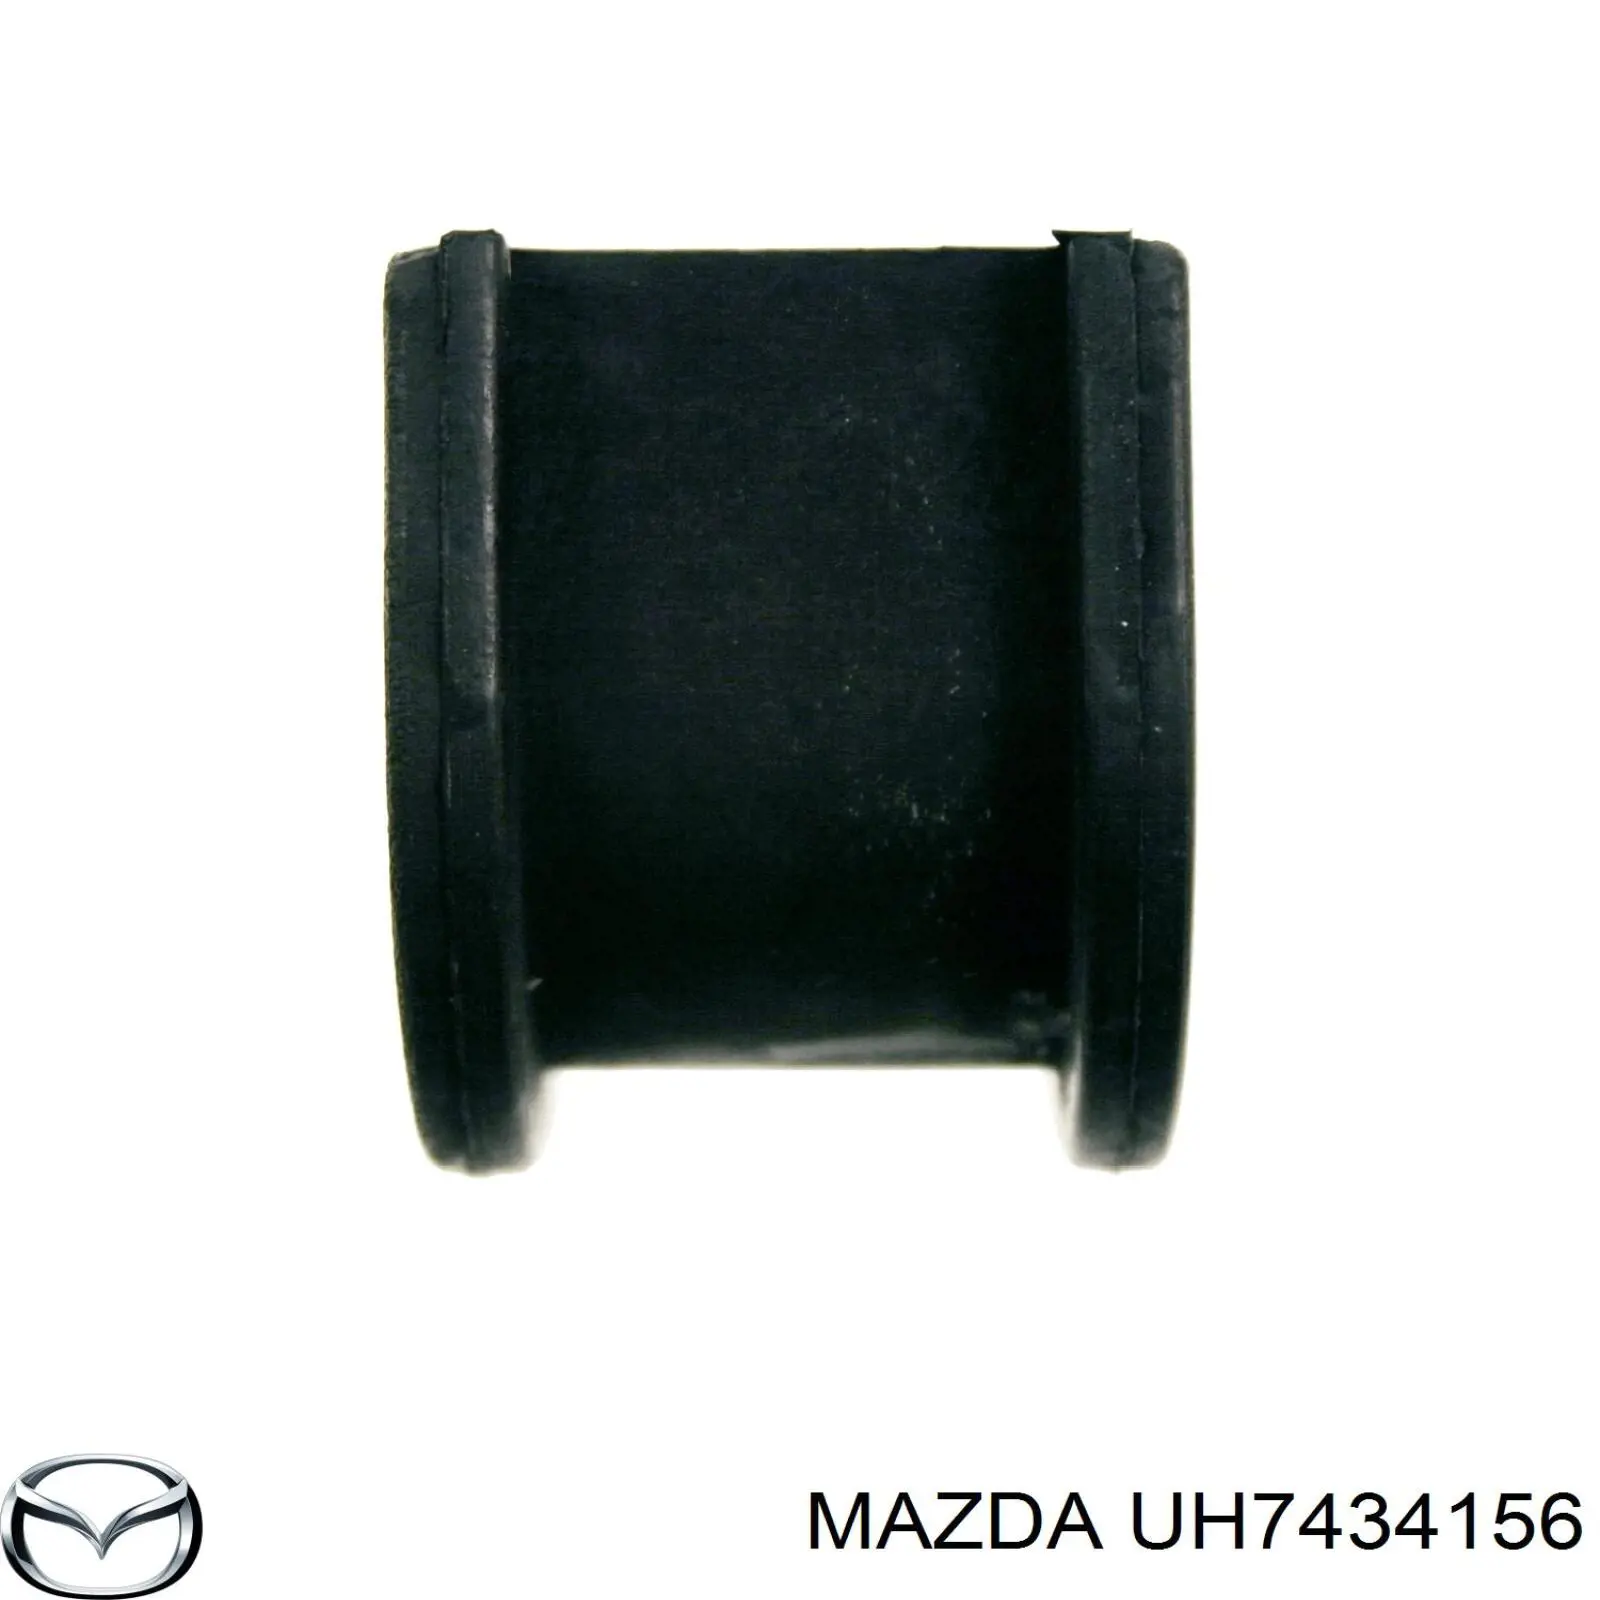 UH7434156 Mazda casquillo de barra estabilizadora delantera